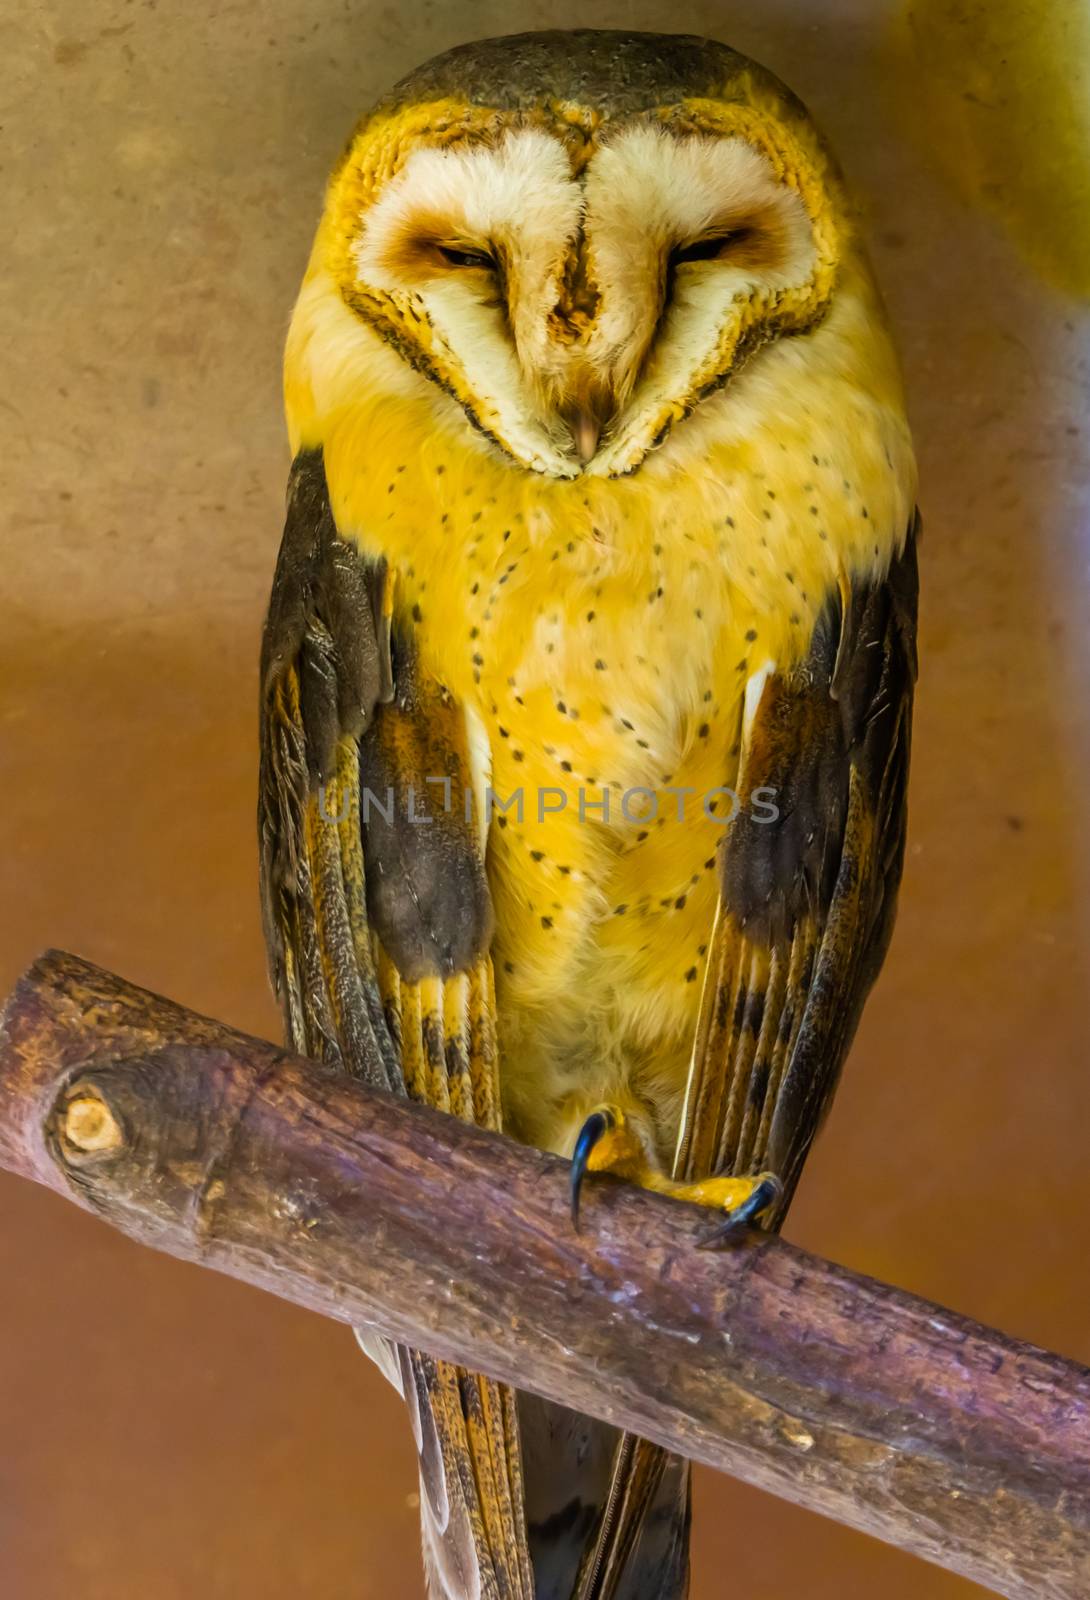 beautiful portrait of a common barn owl, bird specie from the Netherlands by charlottebleijenberg